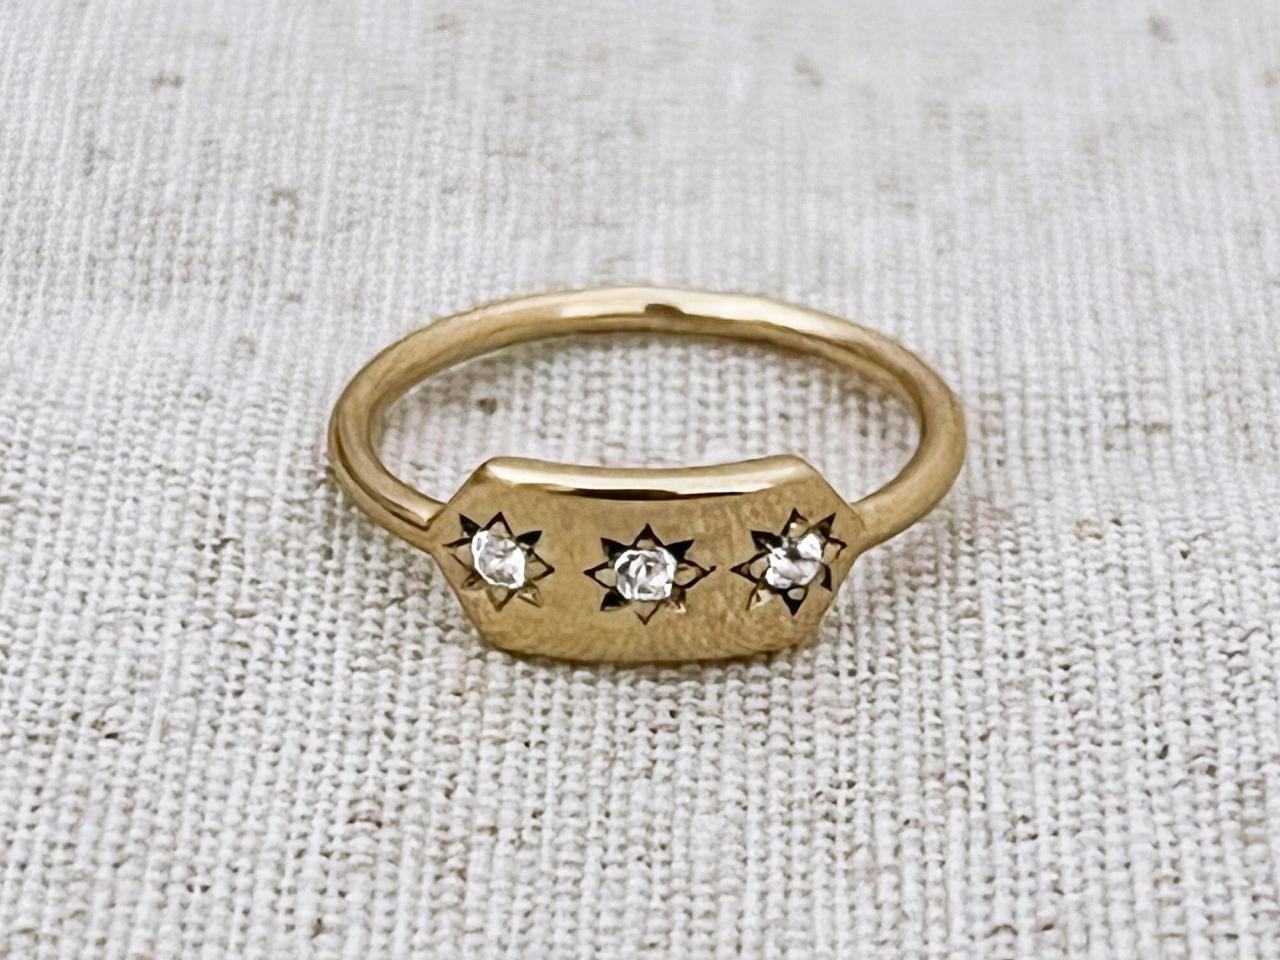 18k diamond signet ring with stars, Solid gold gemstones starburst ring, Celestial pinky ring women gift